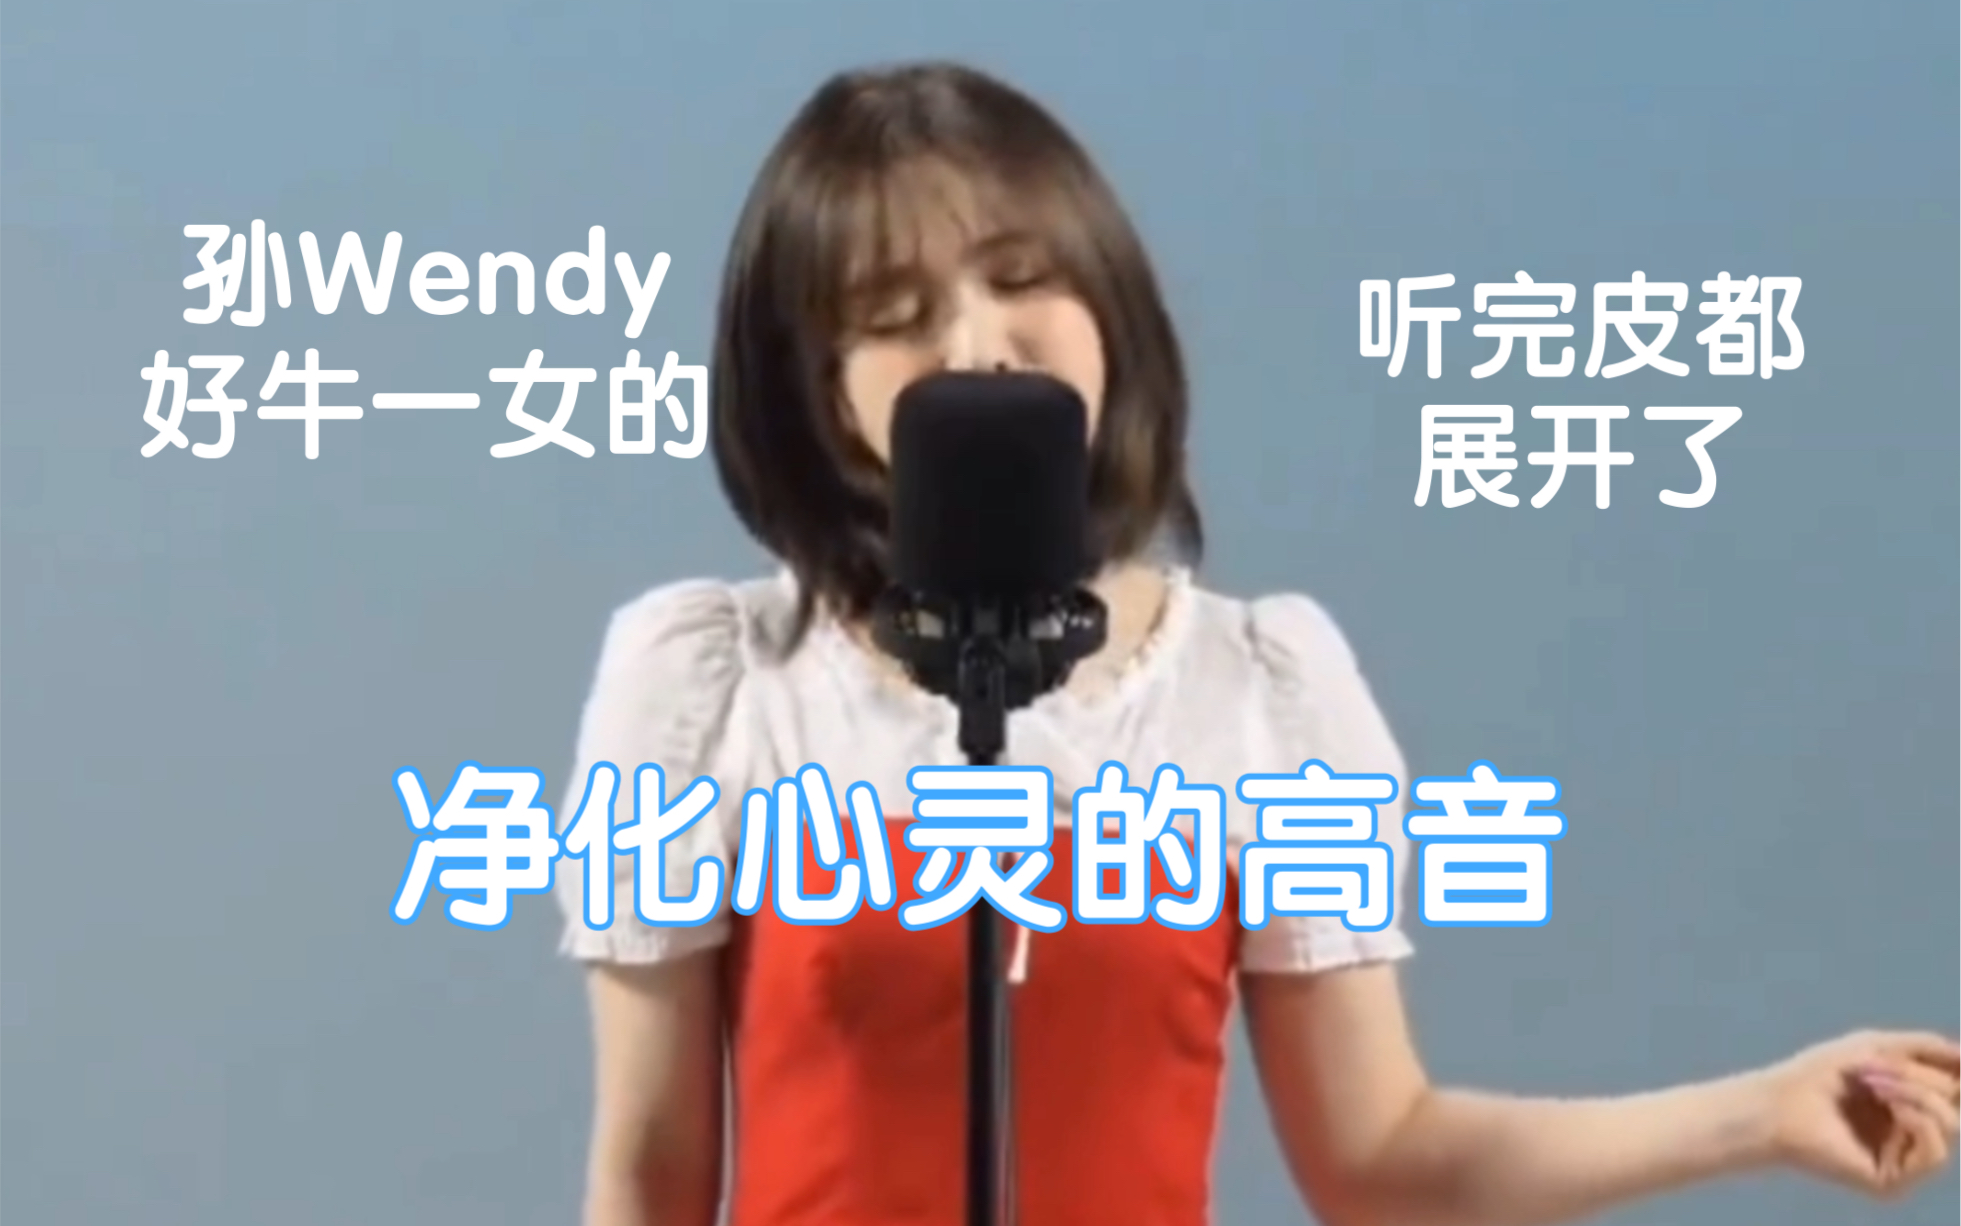 【Wendy】听Wendy唱歌灵魂真的得到了净化这一段高音真的把我的灵魂都升华了